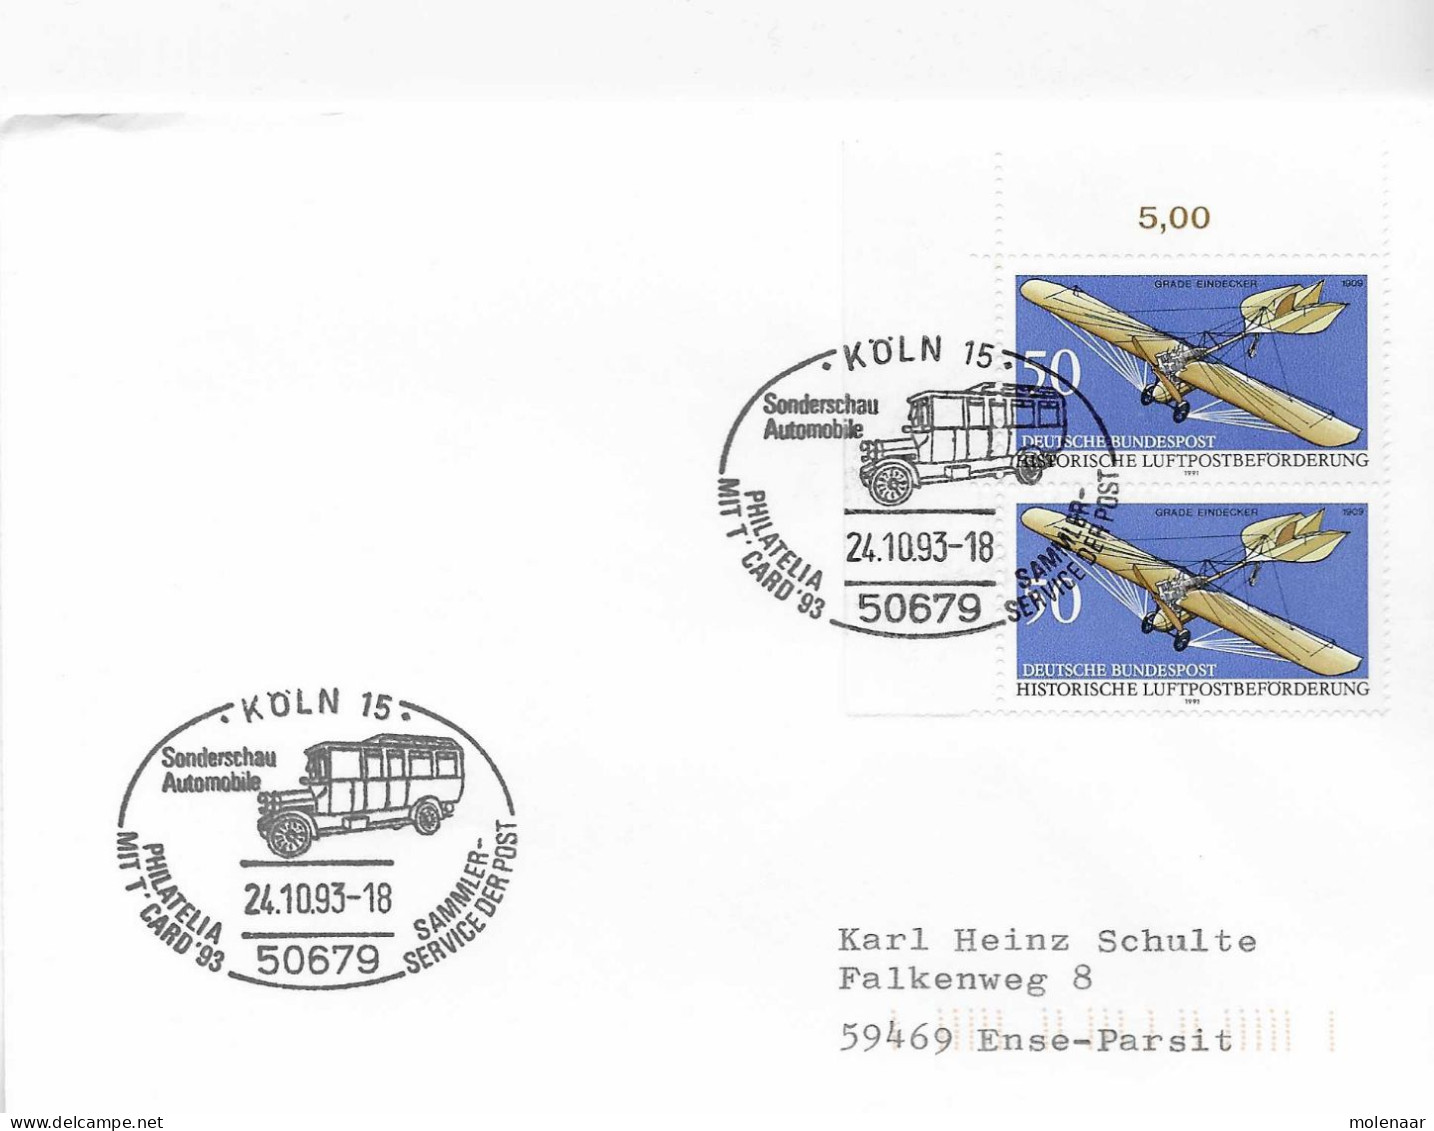 Postzegels > Europa > Duitsland > West-Duitsland > 1990-1999 > Brief Met 2x 1523 (17320) - Covers & Documents